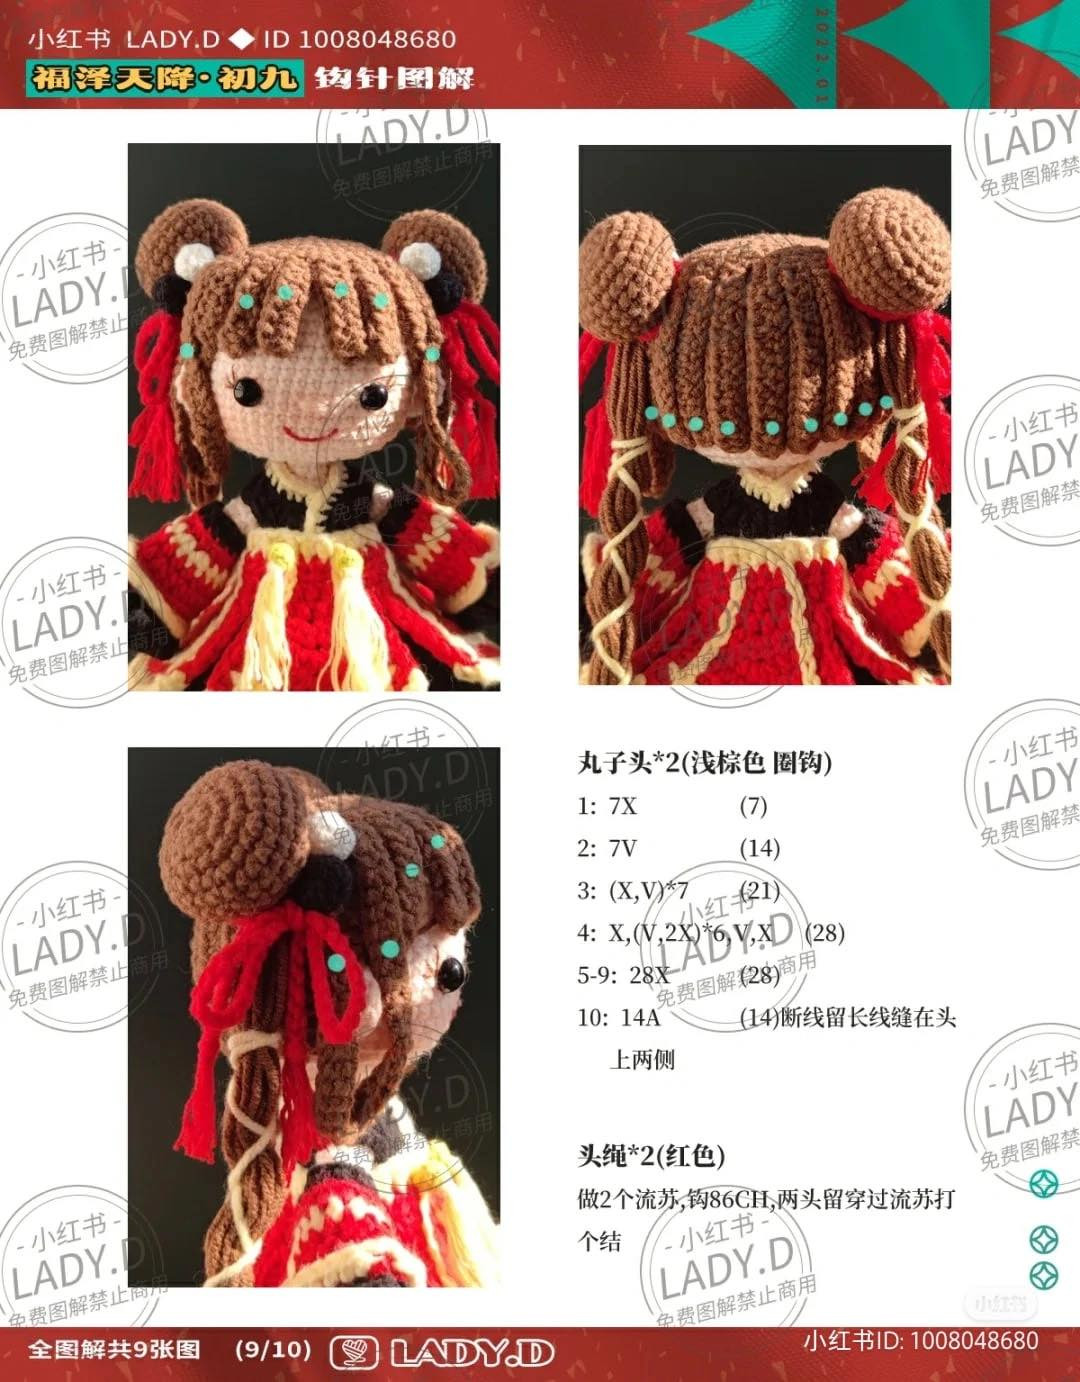 Crochet pattern of brown hair doll wearing a skirt